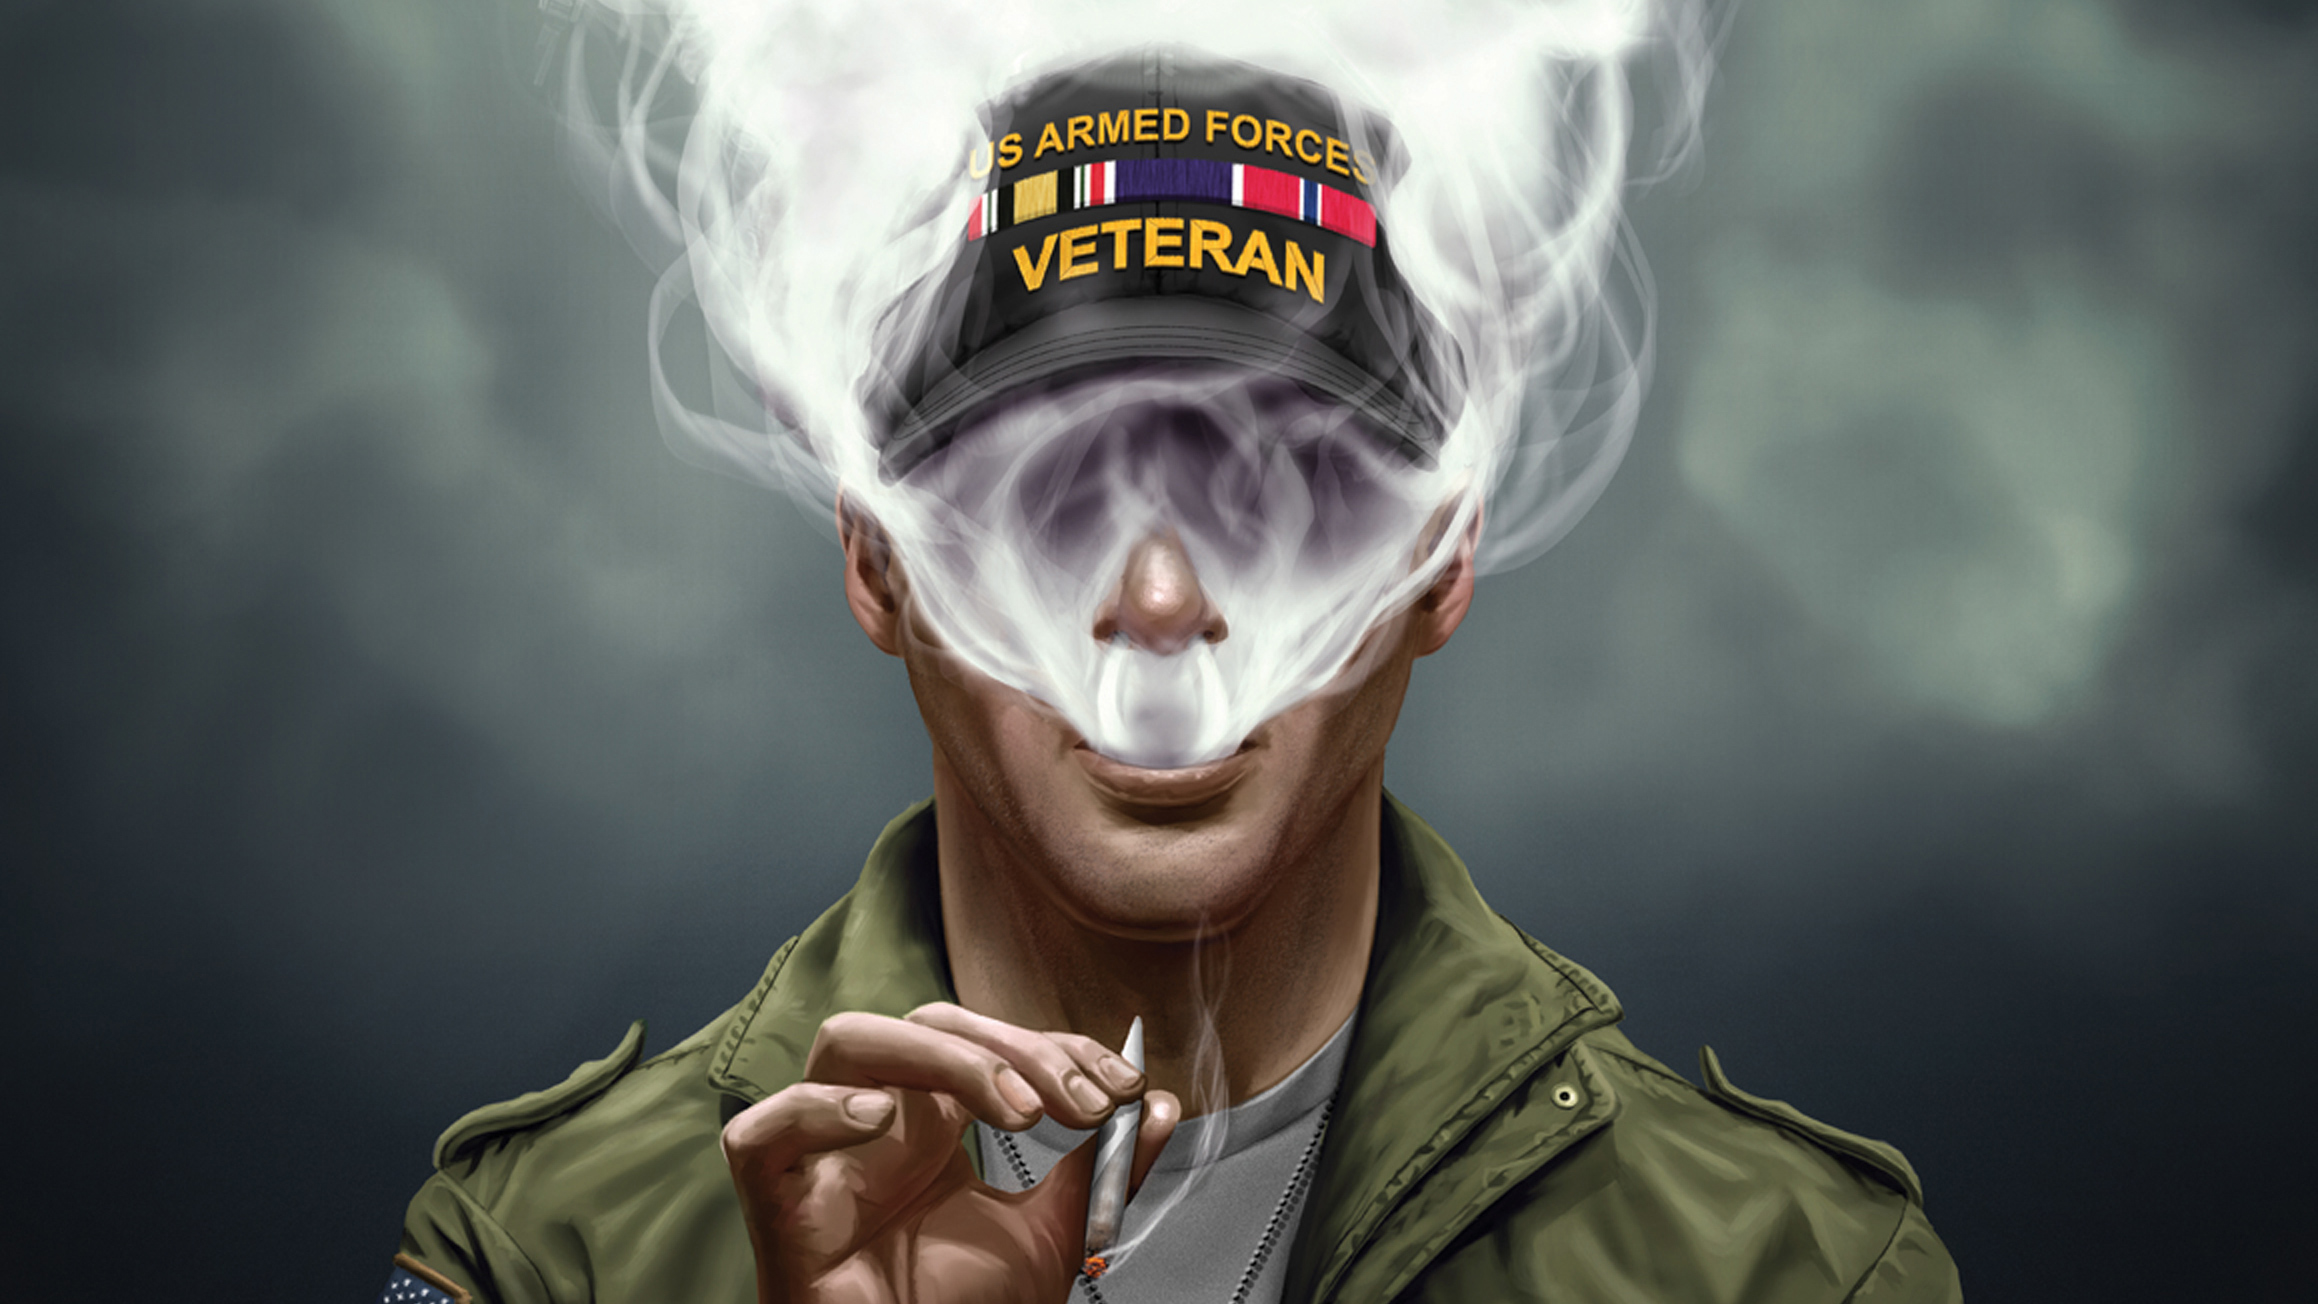 US Armed Force Smoking Cigarette, HD Artist, 4k Wallpapers ...